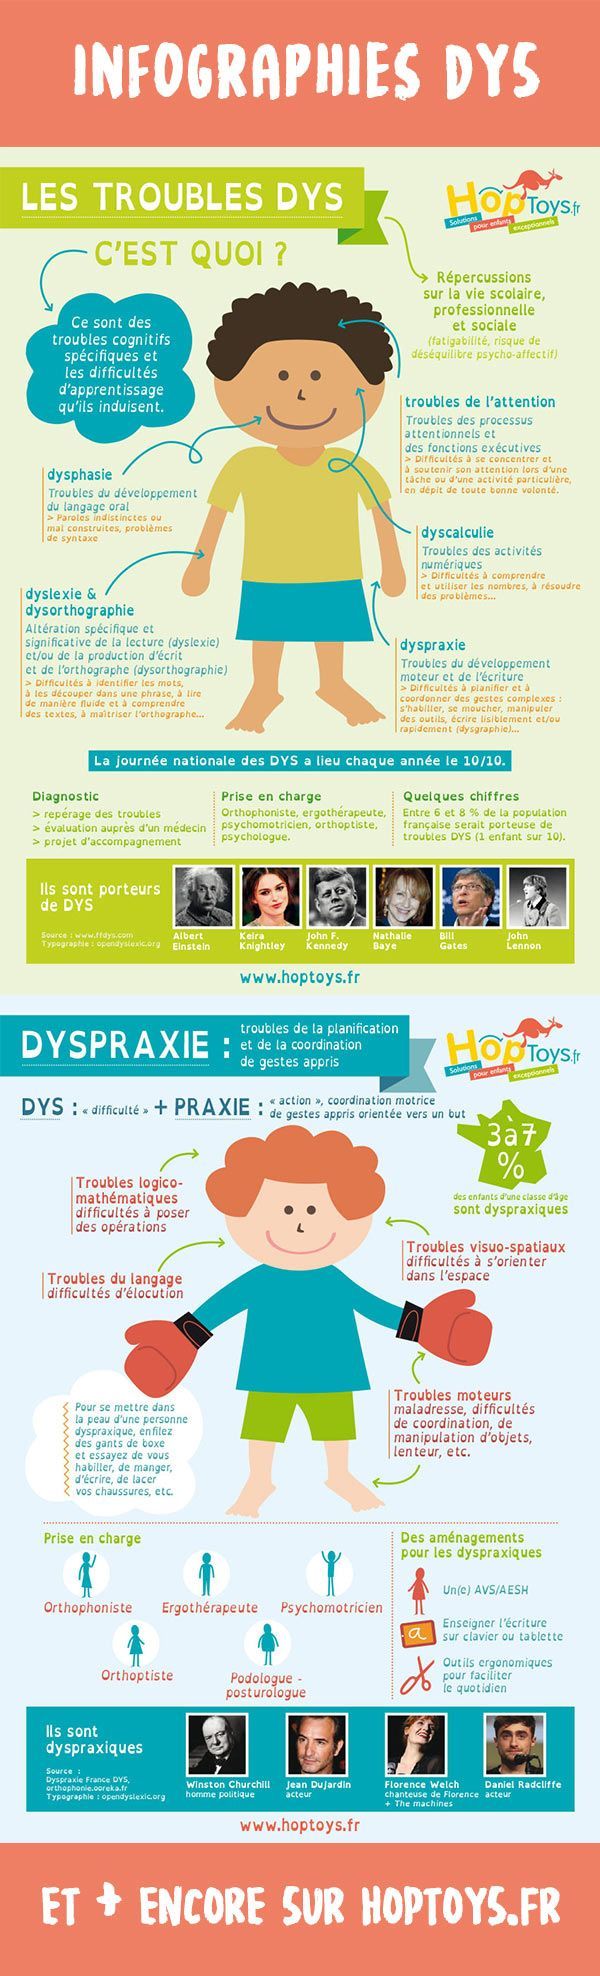 Psychology-Infographic-Telechargement-Les-troubles-DYS-et-la Psychology Infographic : Téléchargement - Les troubles DYS et la dyspraxie en infographie !